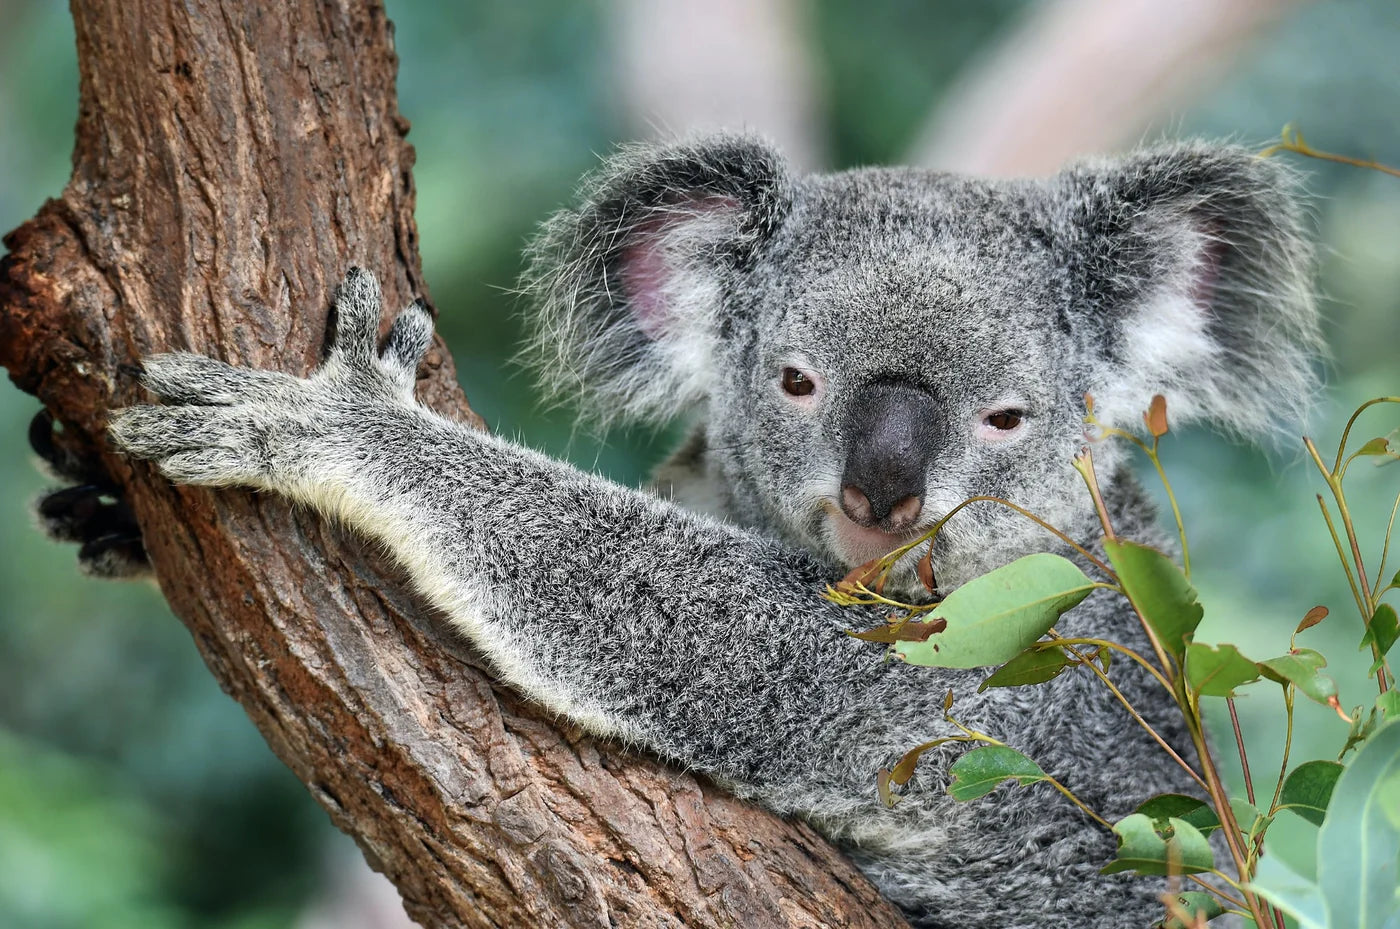 Koala in a tree, for a Koala adoption